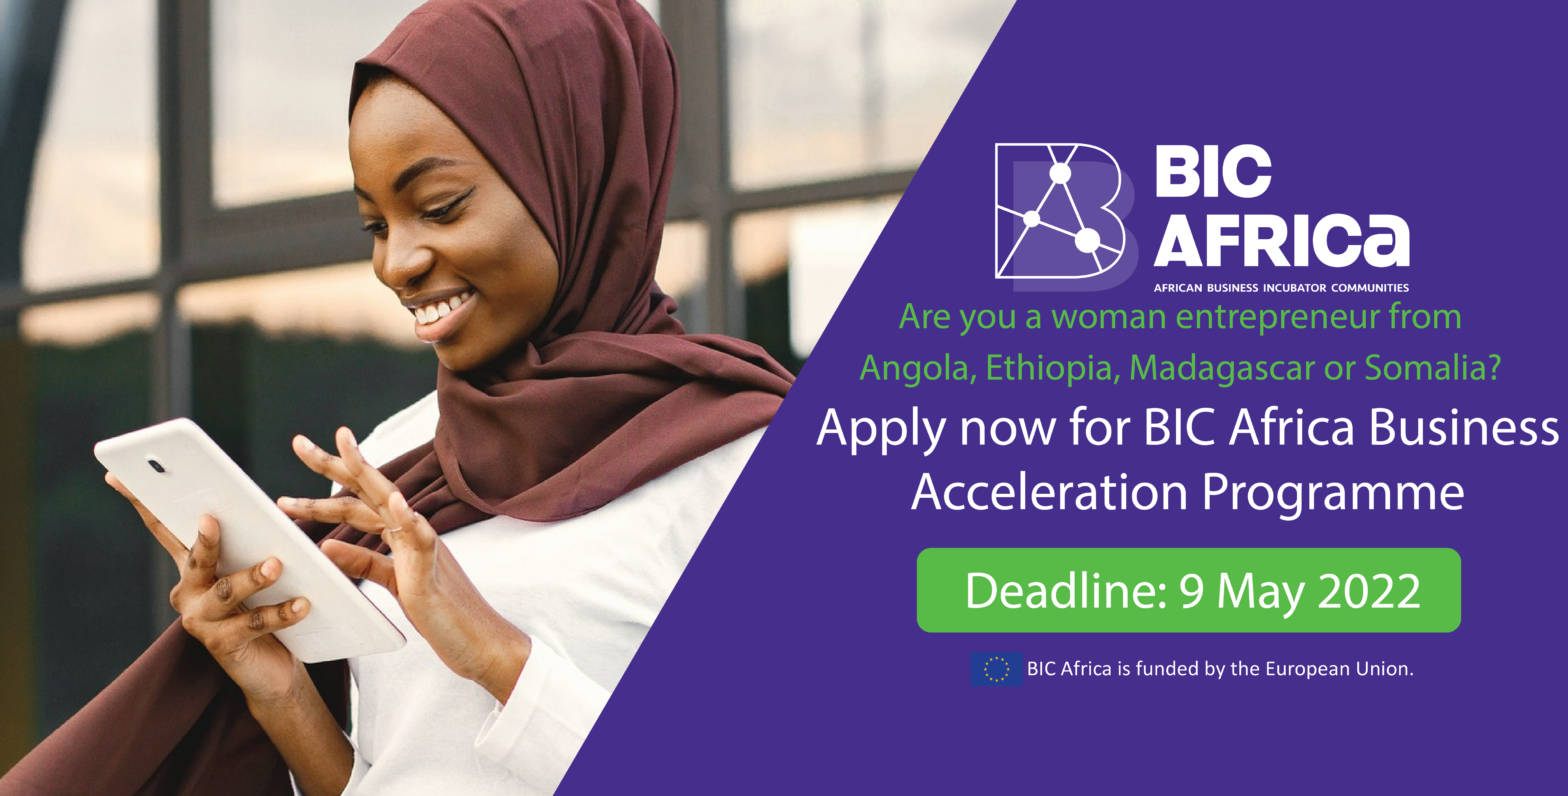 Call for Applications for Acceleration Programme for Women Entrepreneurs